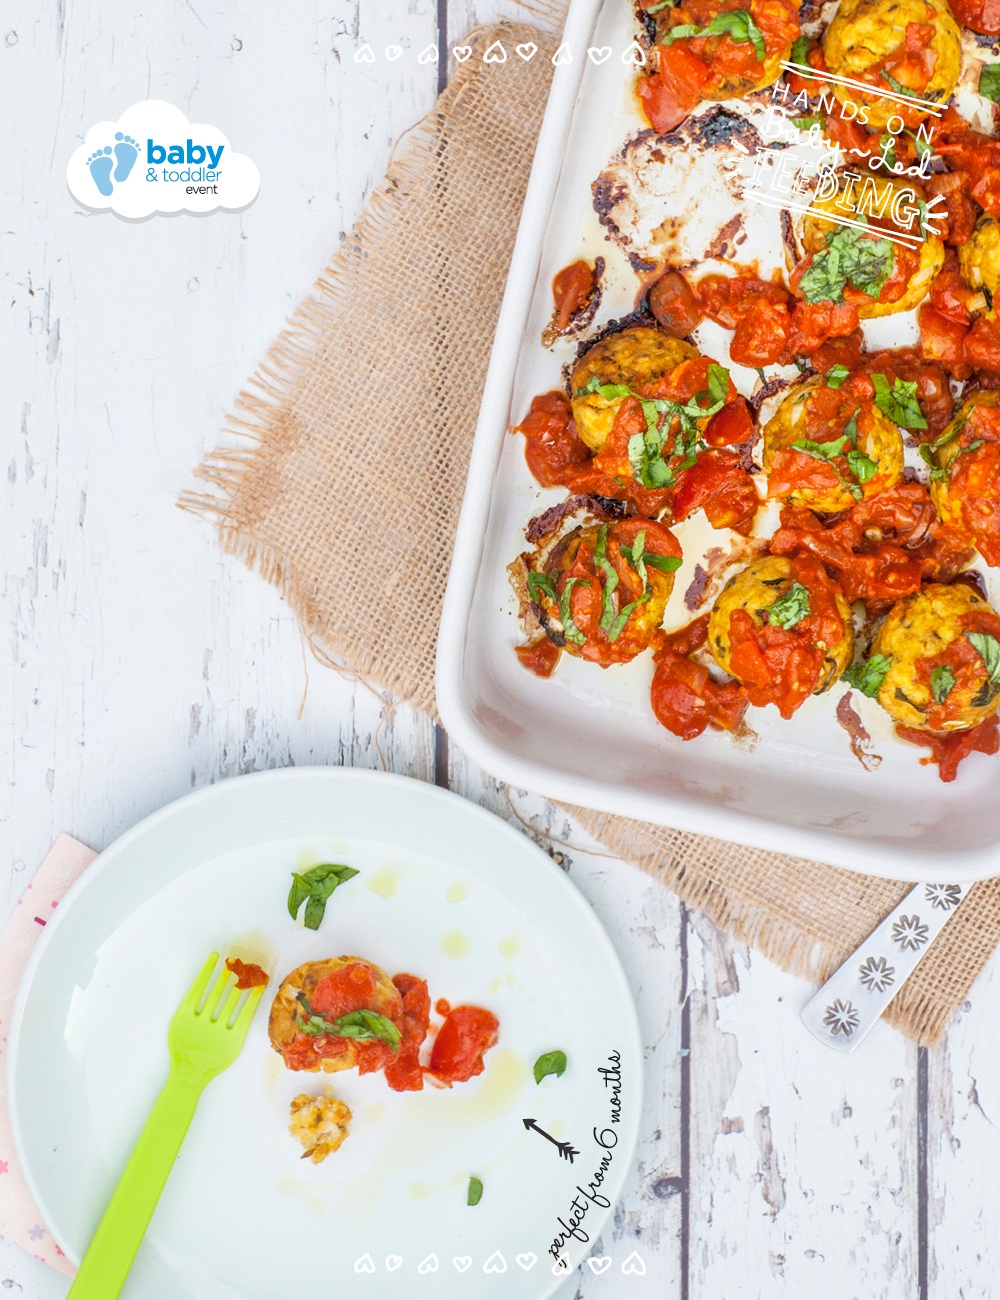 Baby-Led-Feeding-Moroccan-Turkey-Meatballs-Recipe-Image